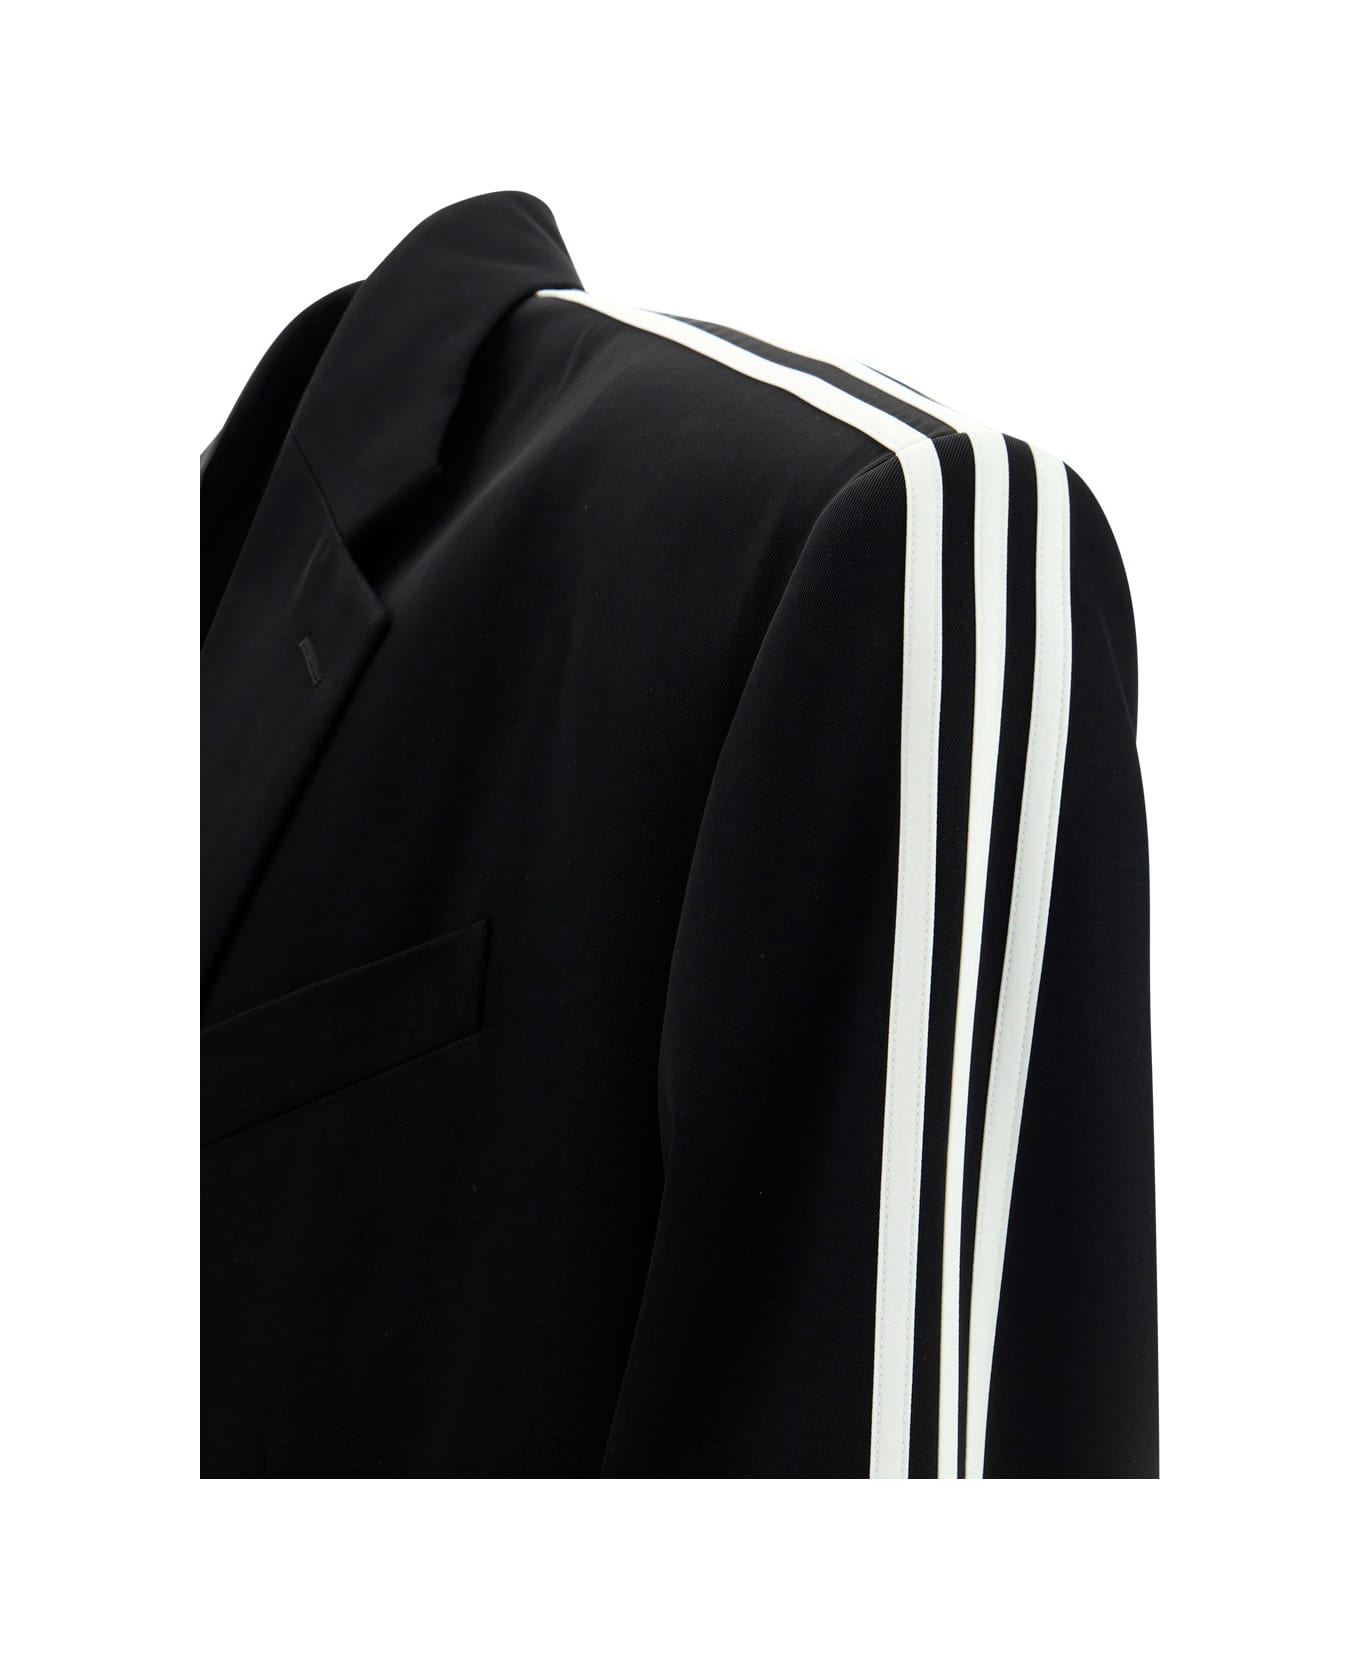 Balenciaga X Adidas Blazer Jacket - Black